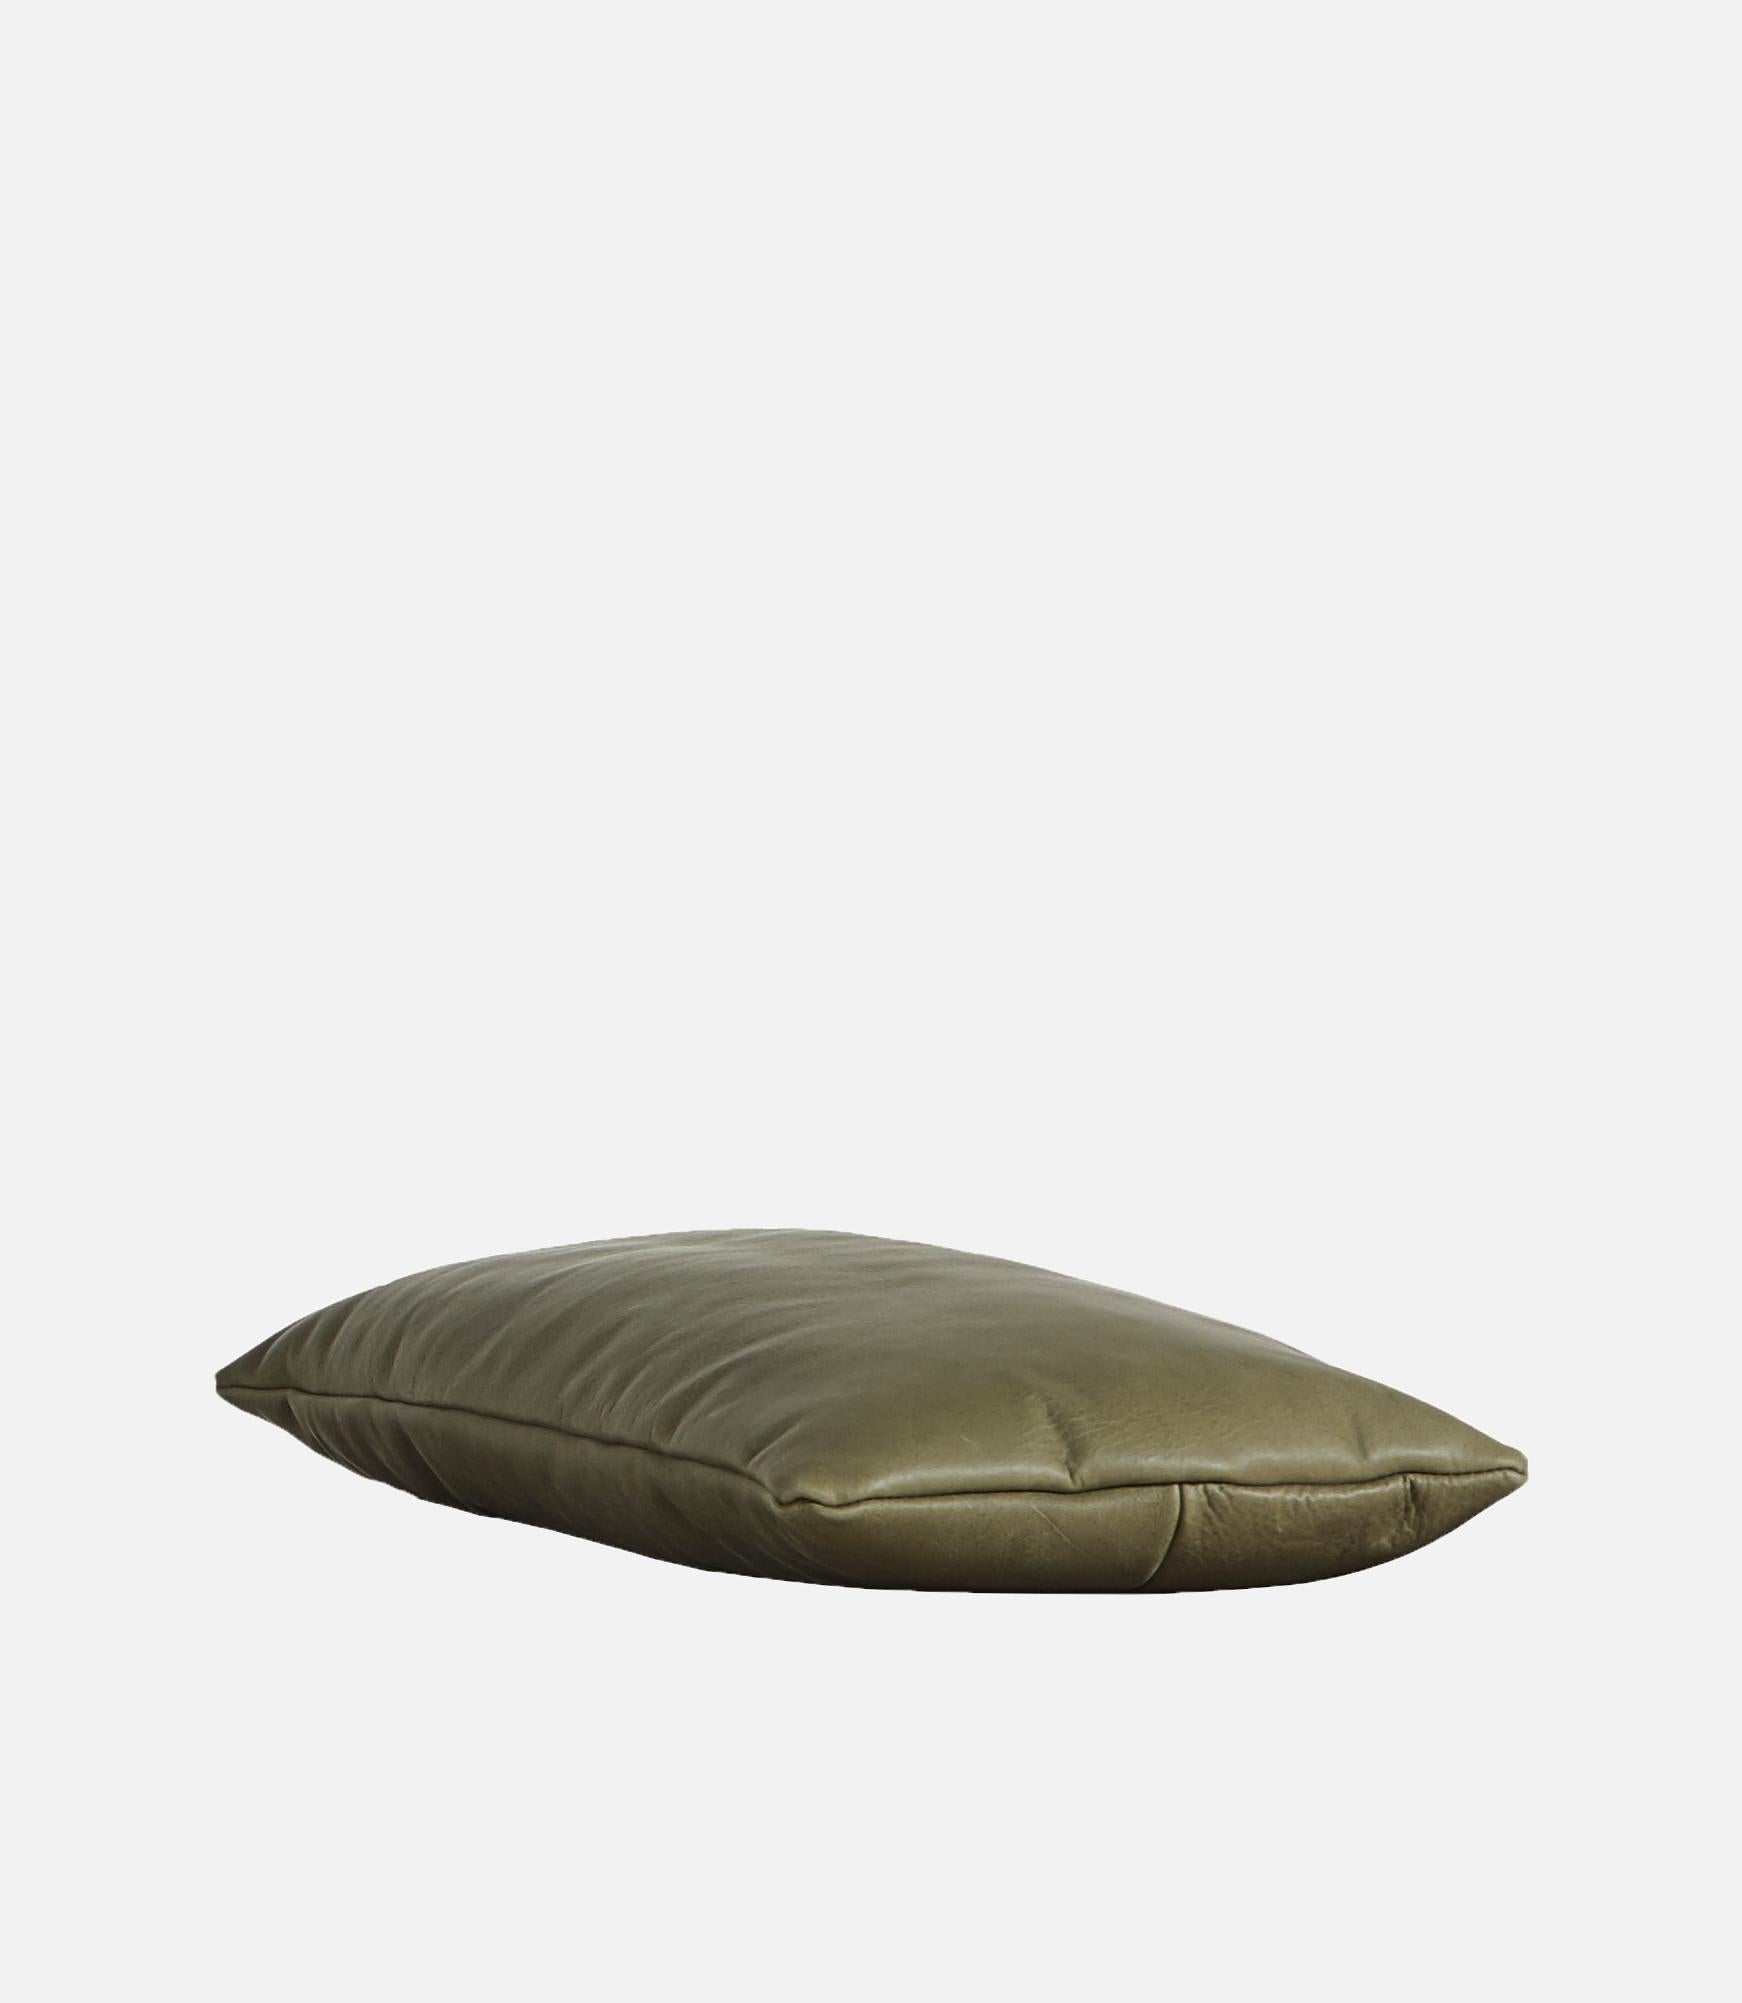 Danish Level Pillow by Msds Studio